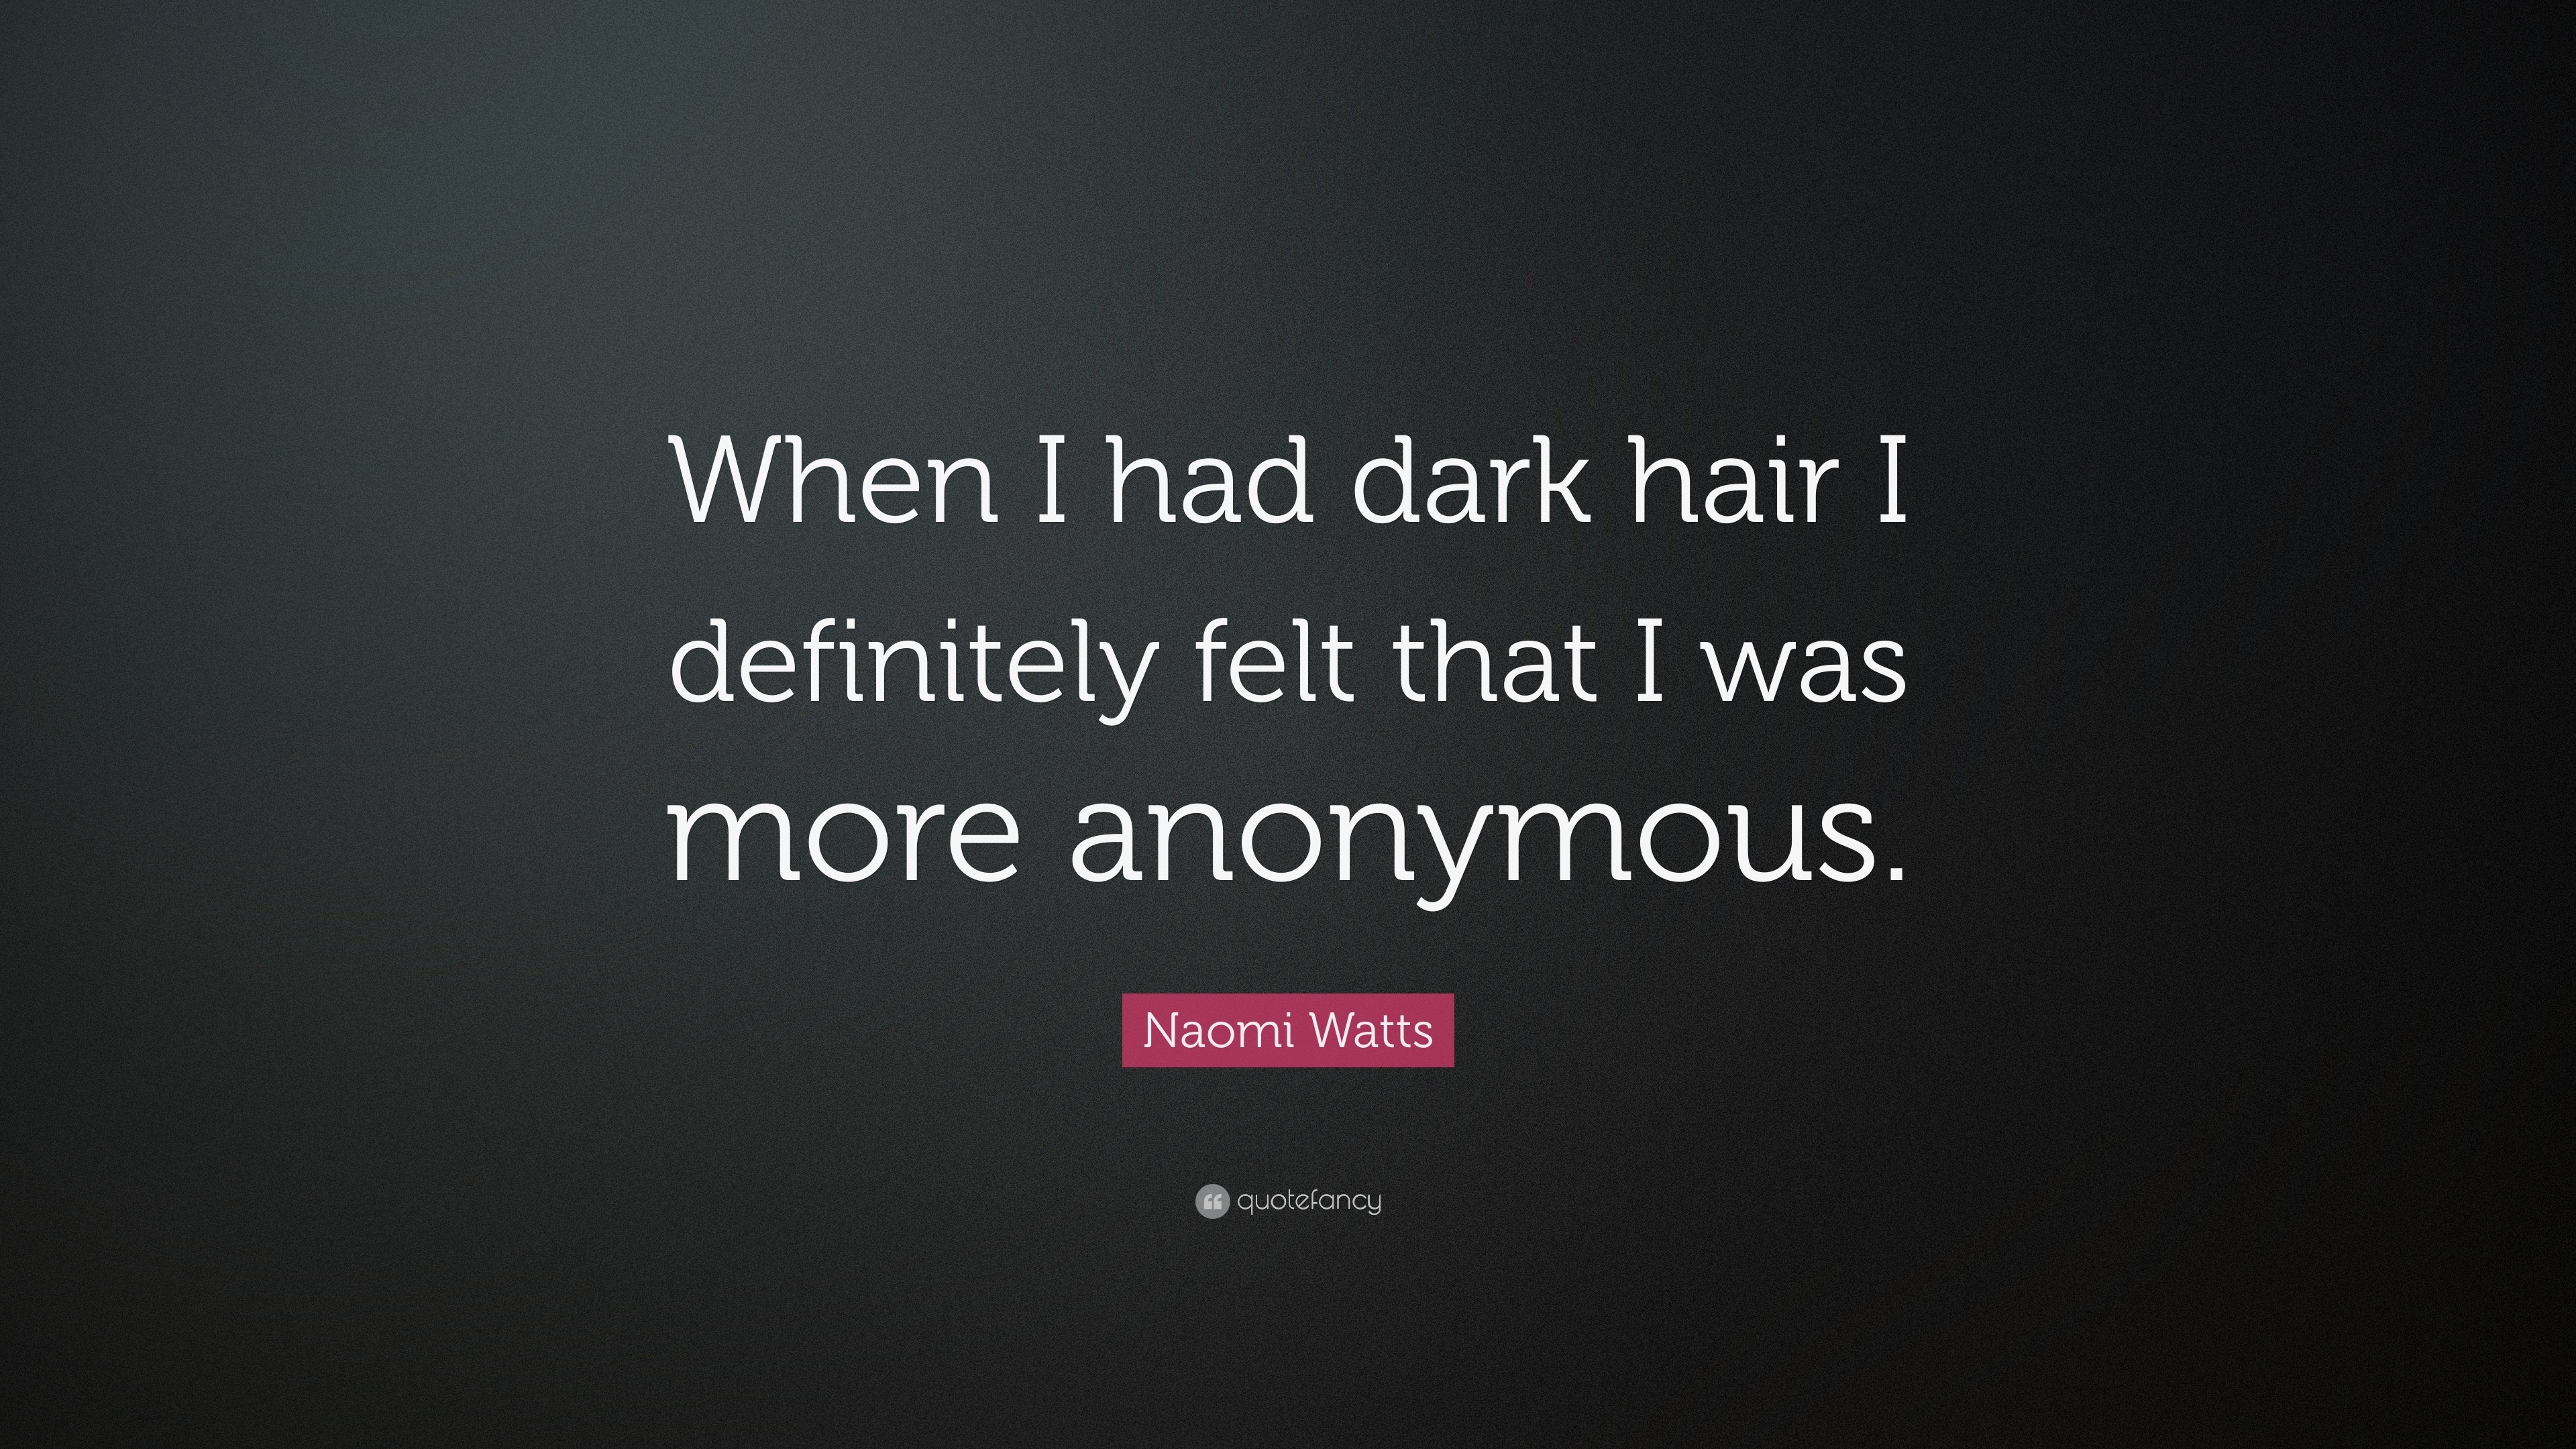 Naomi Watts Quote: “When I had dark hair I definitely felt that I was more  anonymous.”